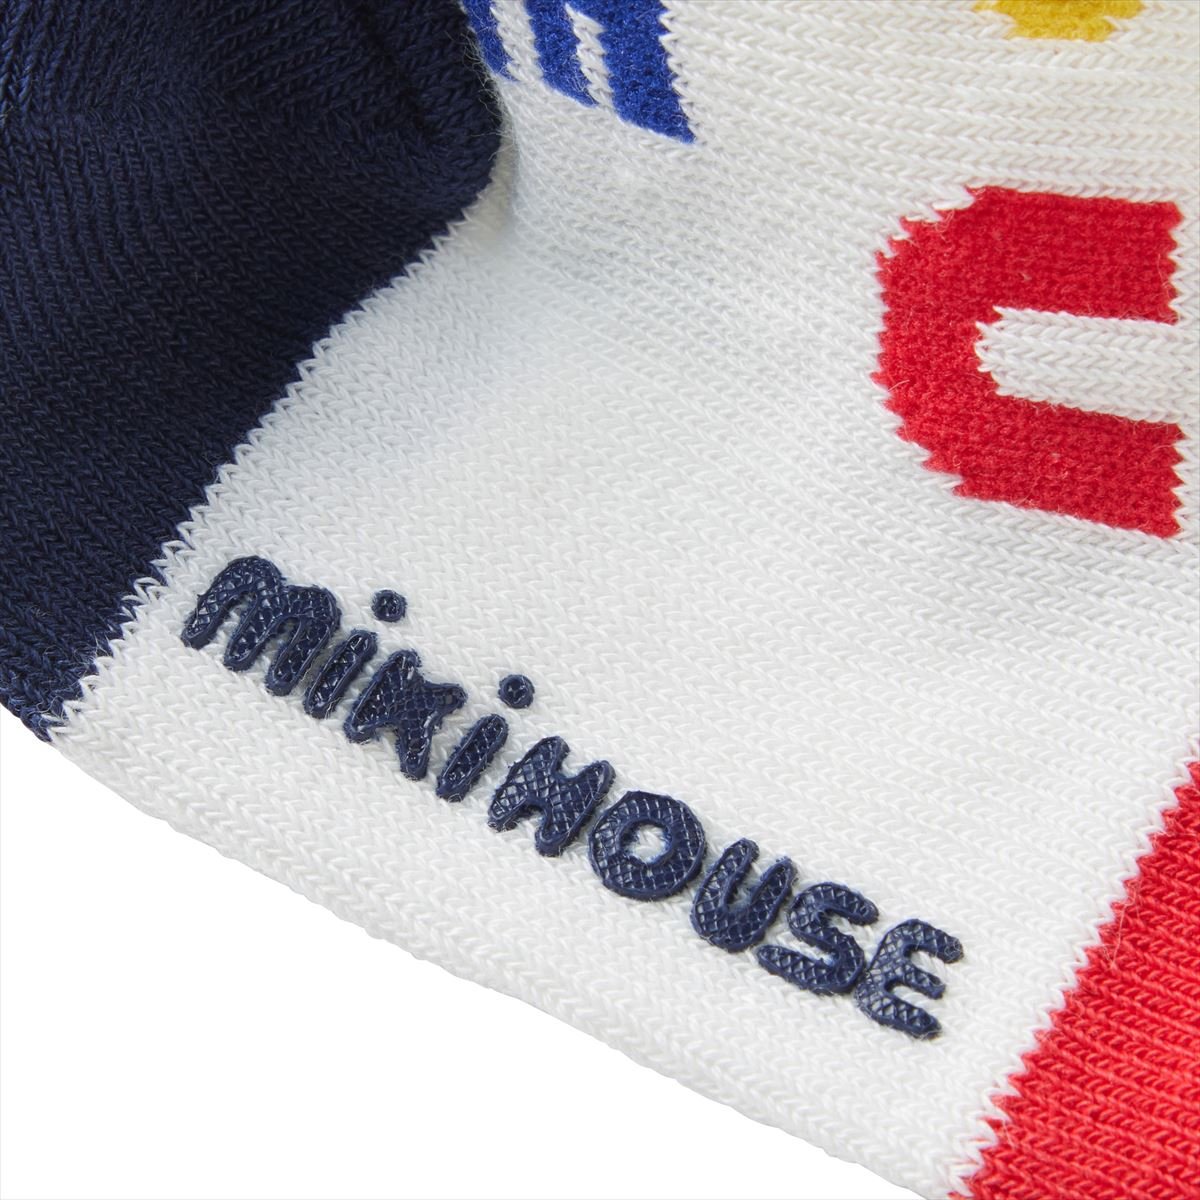 MIKI HOUSE Logo Socks-Pucci - MIKI HOUSE USA